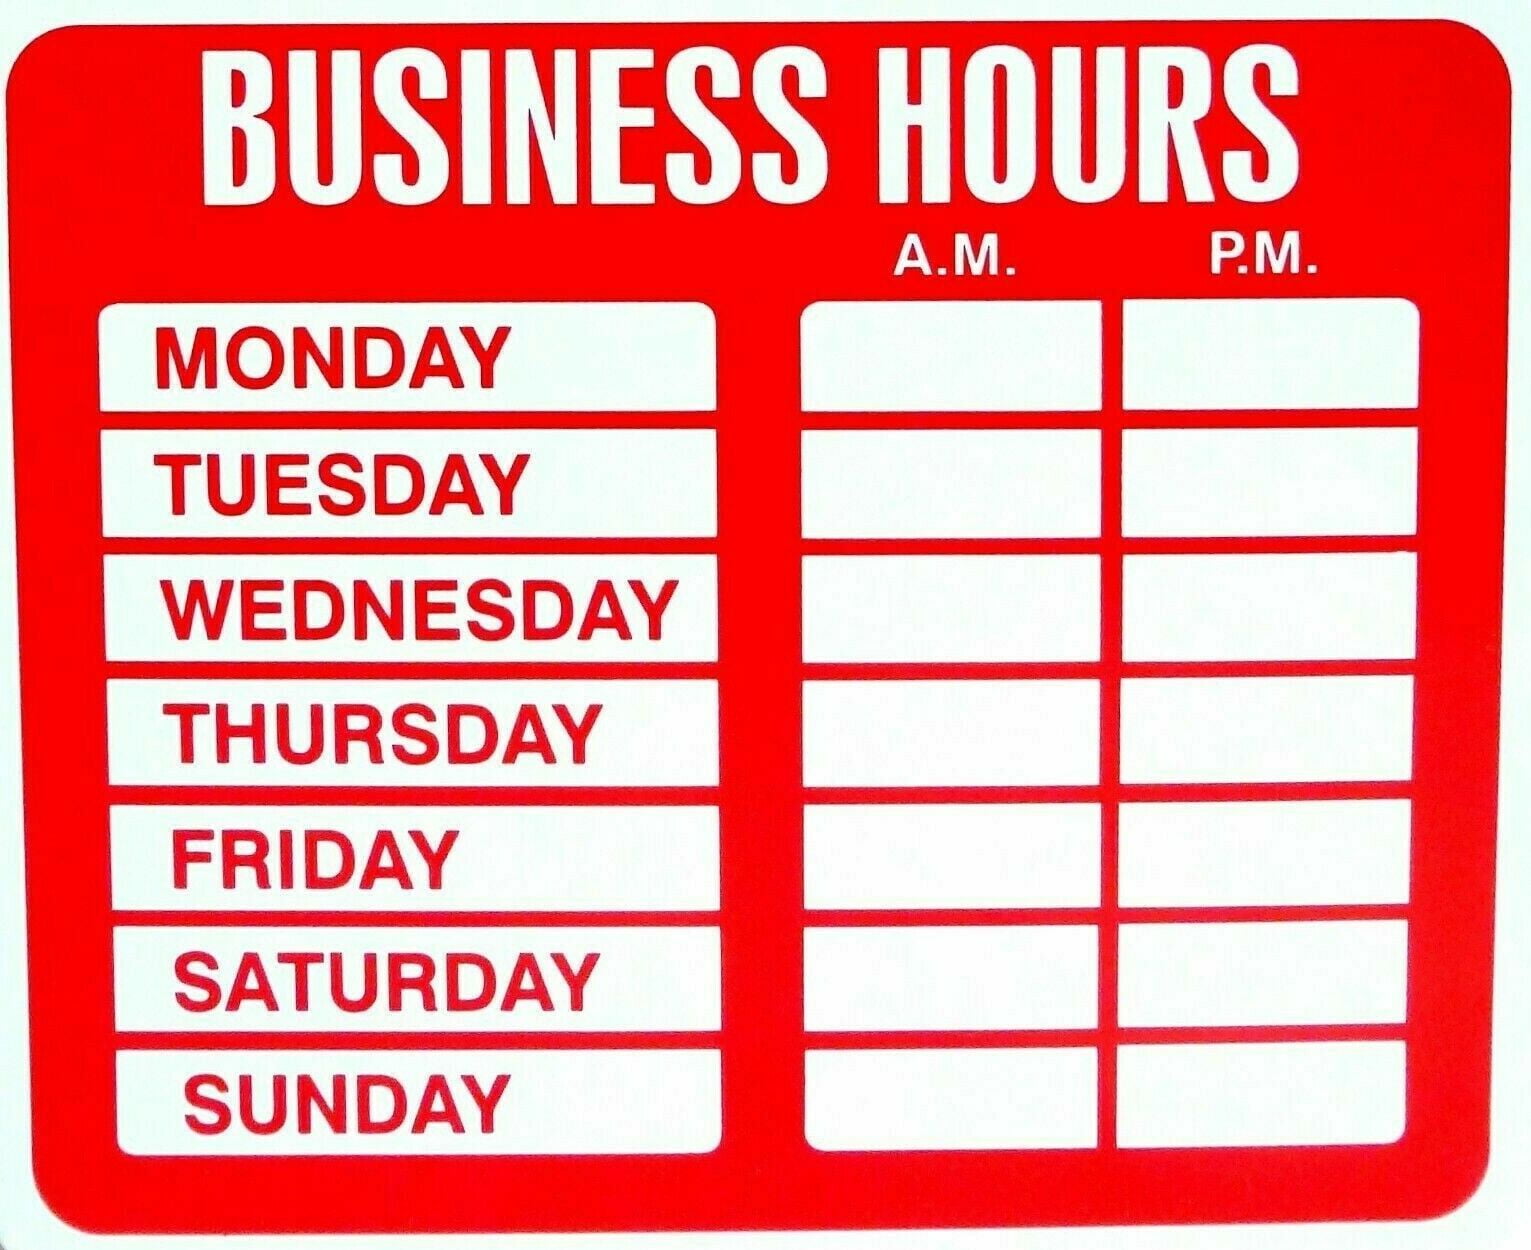 Business hours. Понедельник табличка. Sunday Monday Tuesday. Табличка working hours английском. Как переводится sunday